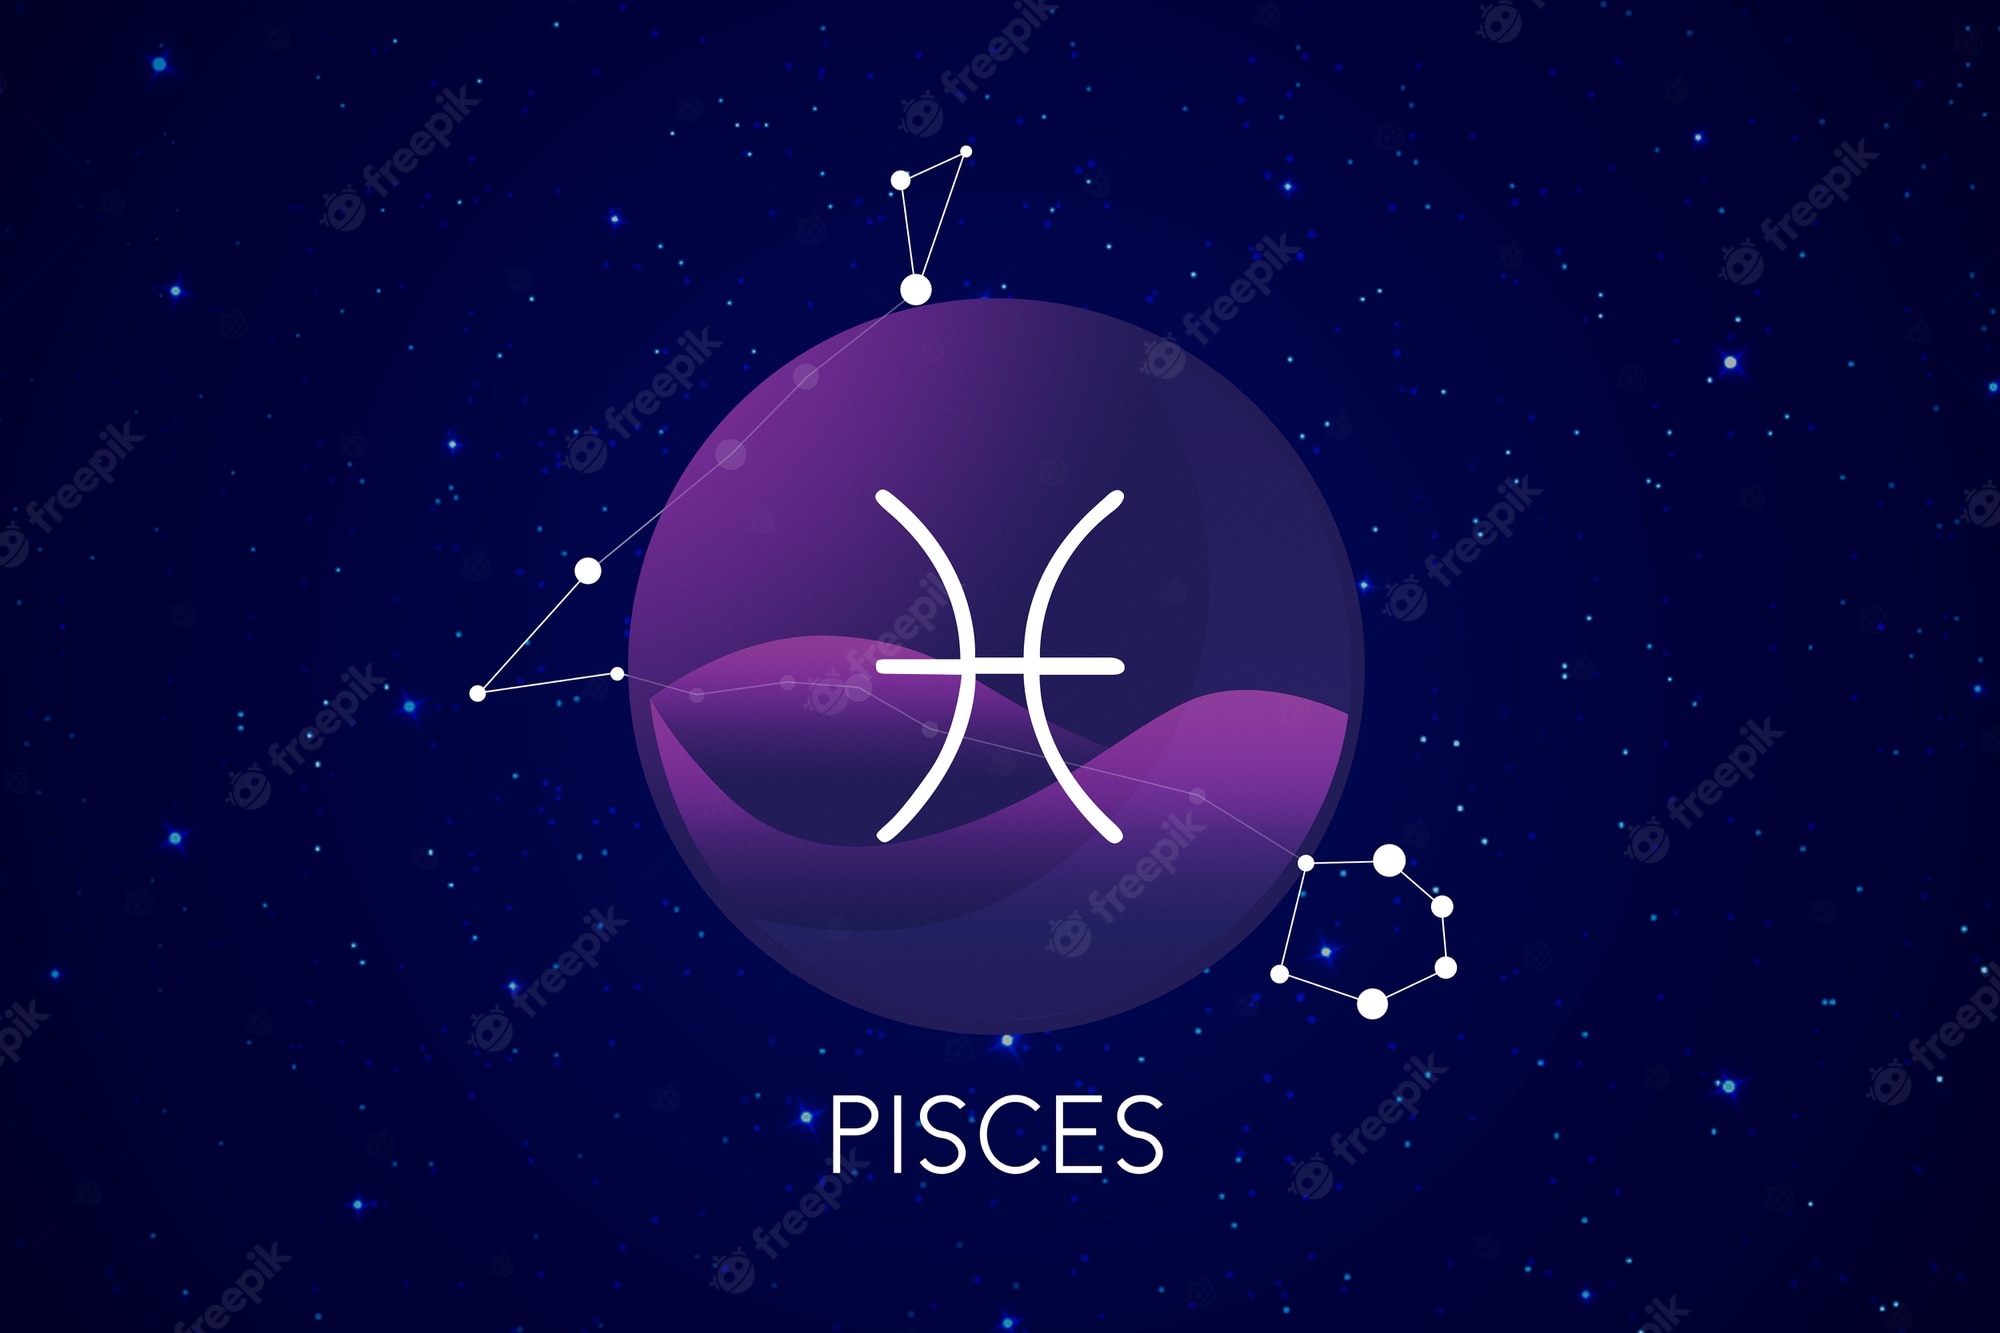 Pisces Symbol Image. Free Vectors, & PSD